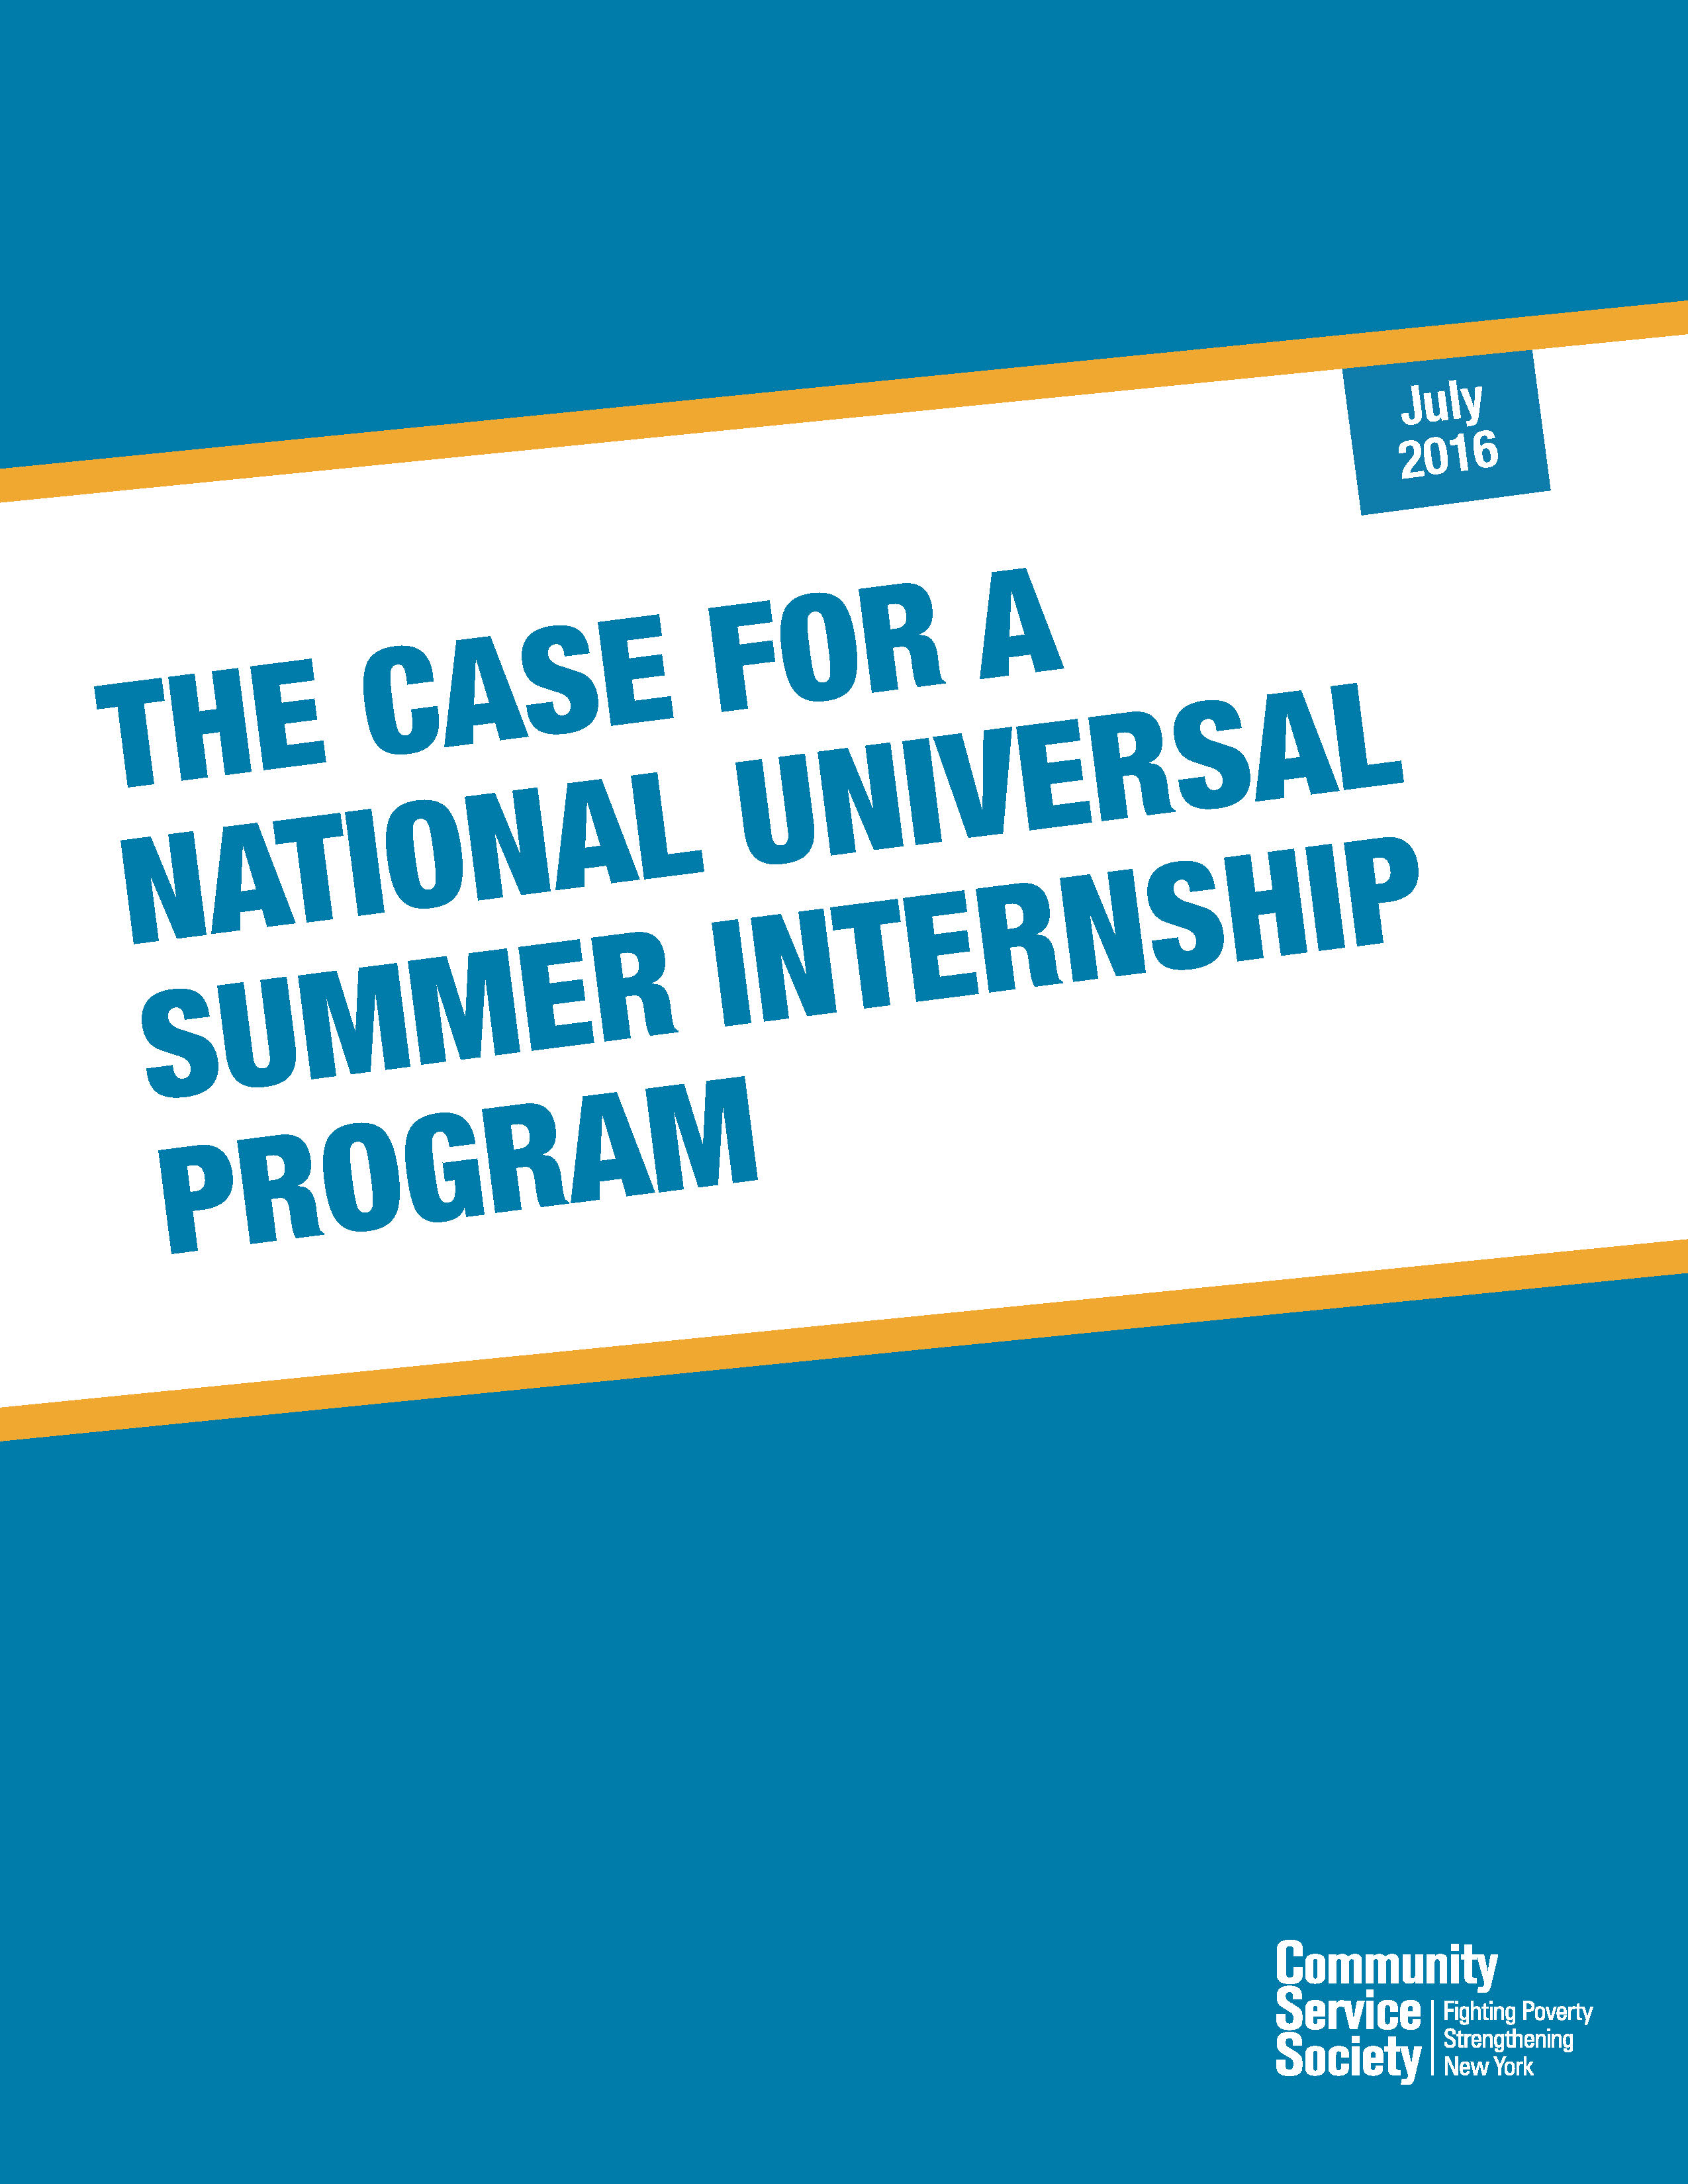 The Case For a National Universal Summer Internship Program